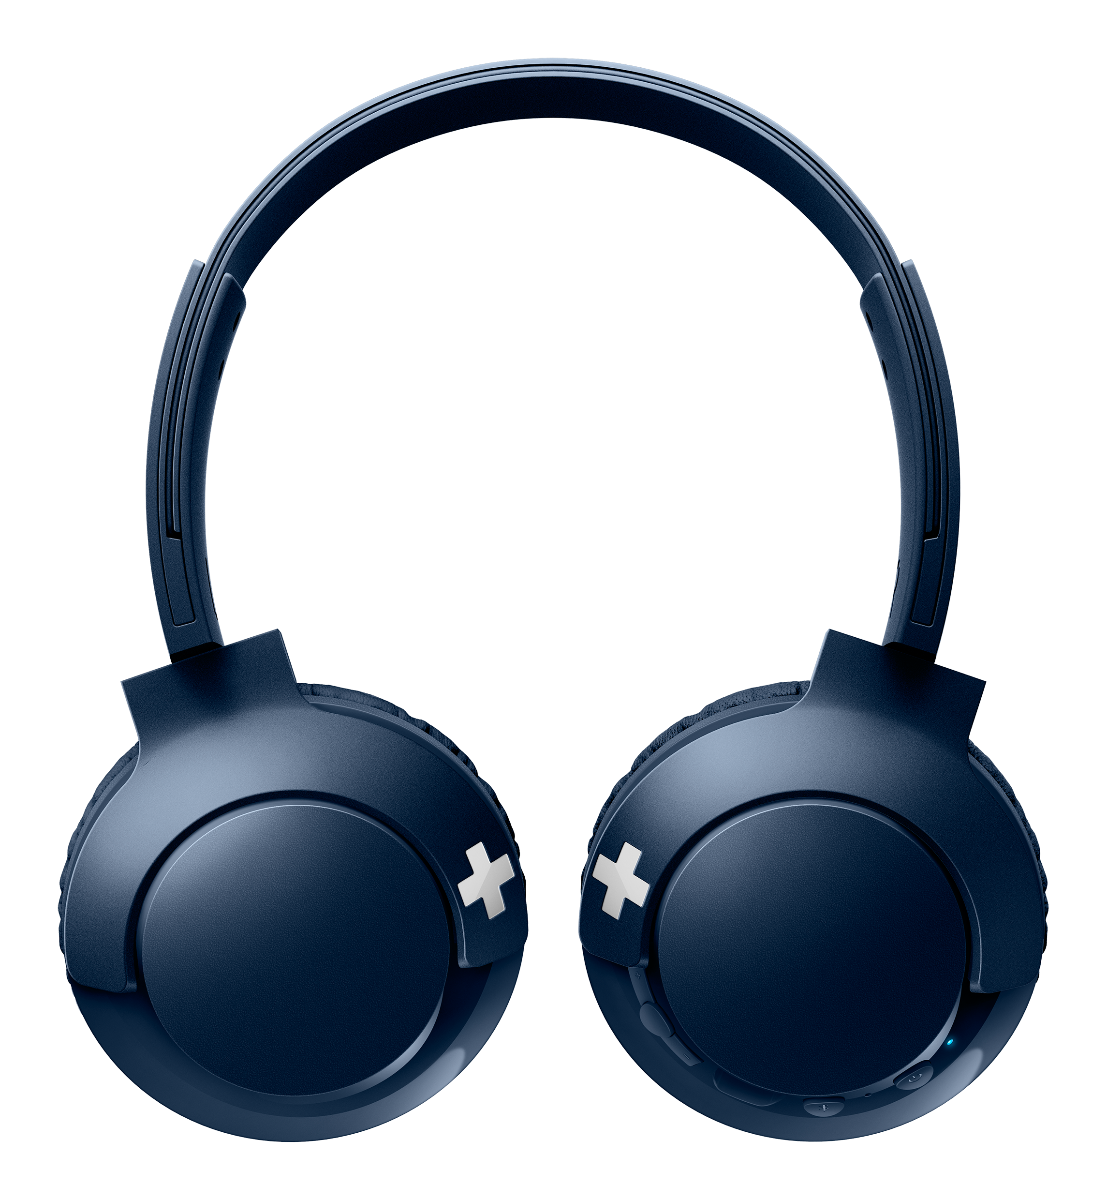 Casca ovear ear SHB3075BL/00 Philips, Bluetooth, Albastru